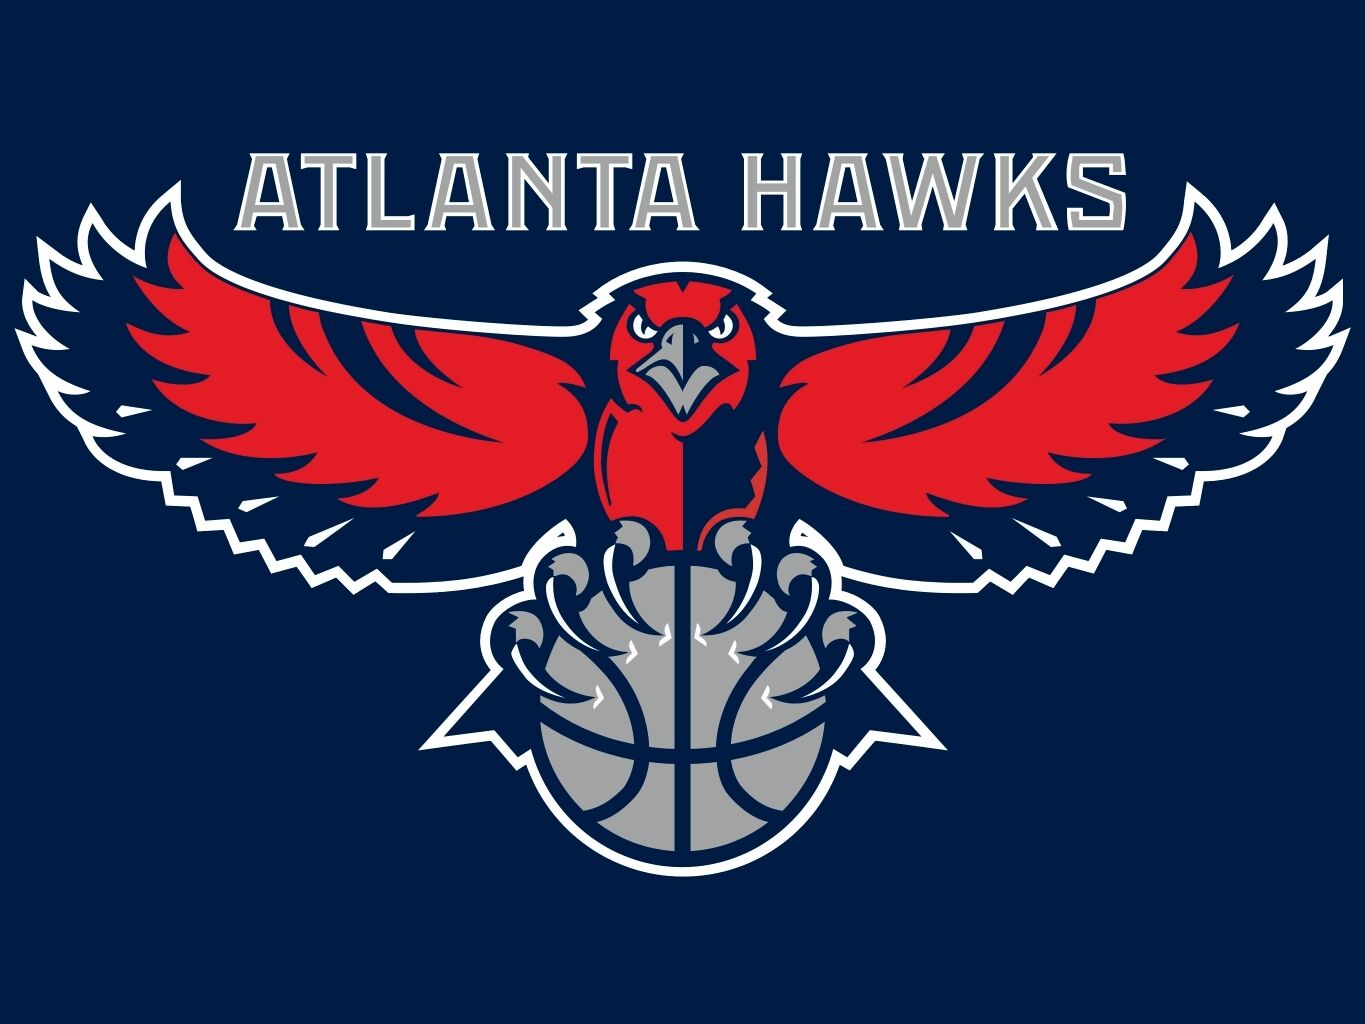 Atlanta Hawks unveil new uniforms, colors and logos - Uniform Authority